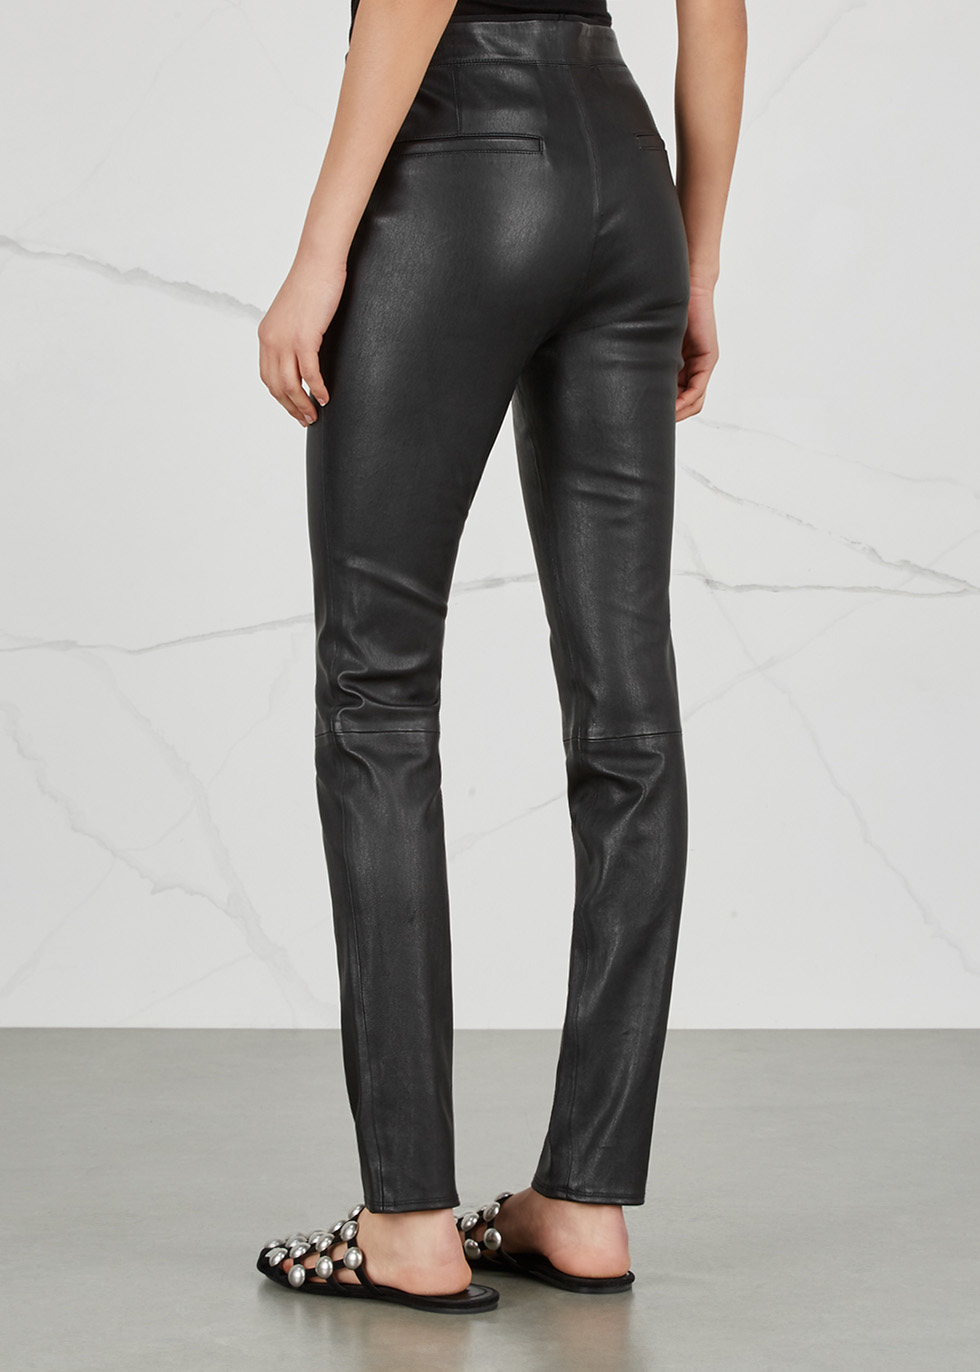 helmut lang stretch leather pants